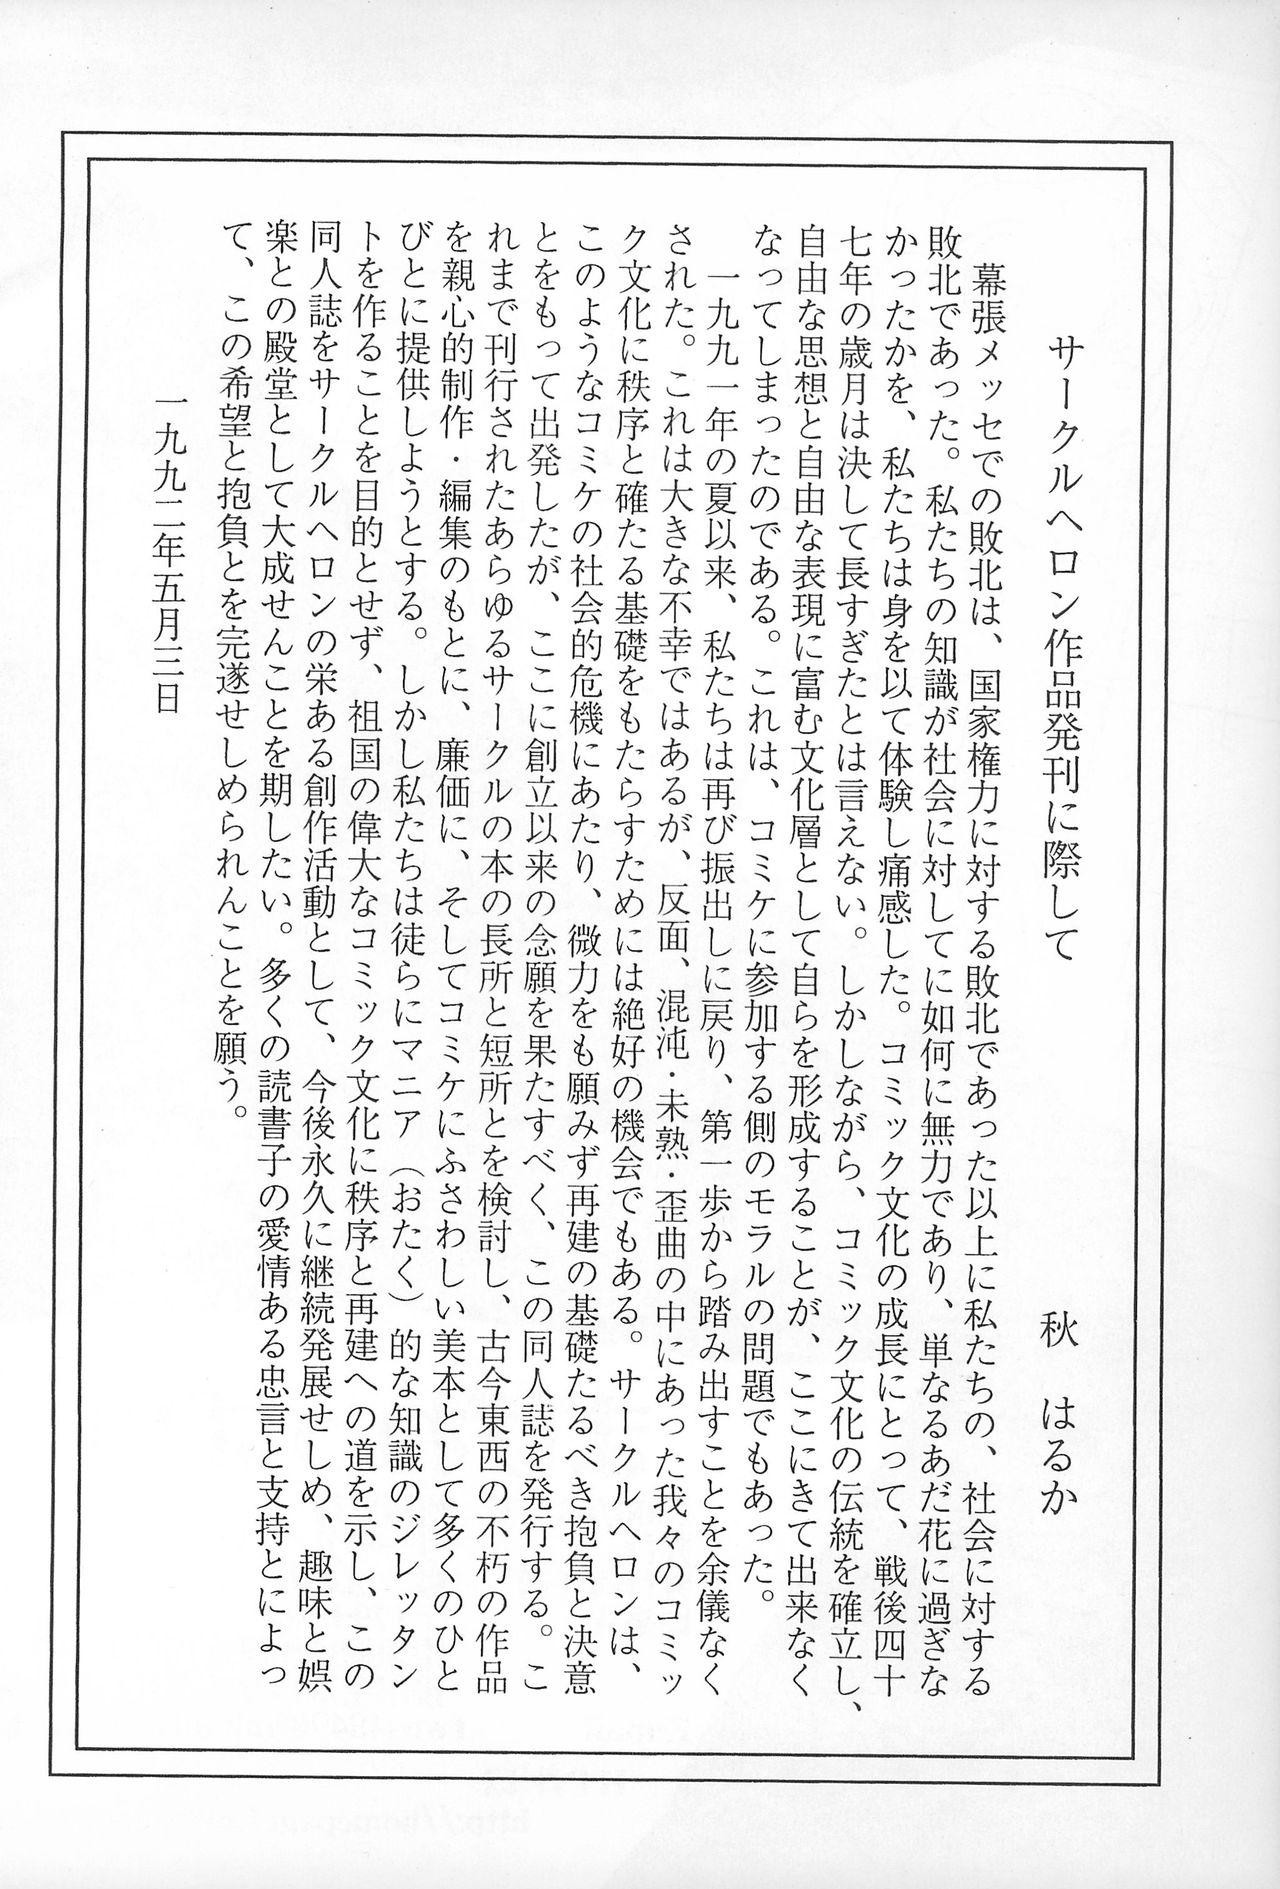 Analfucking Rokushin Gattai - Magewappa 13 - Mon colle knights Novinha - Page 53